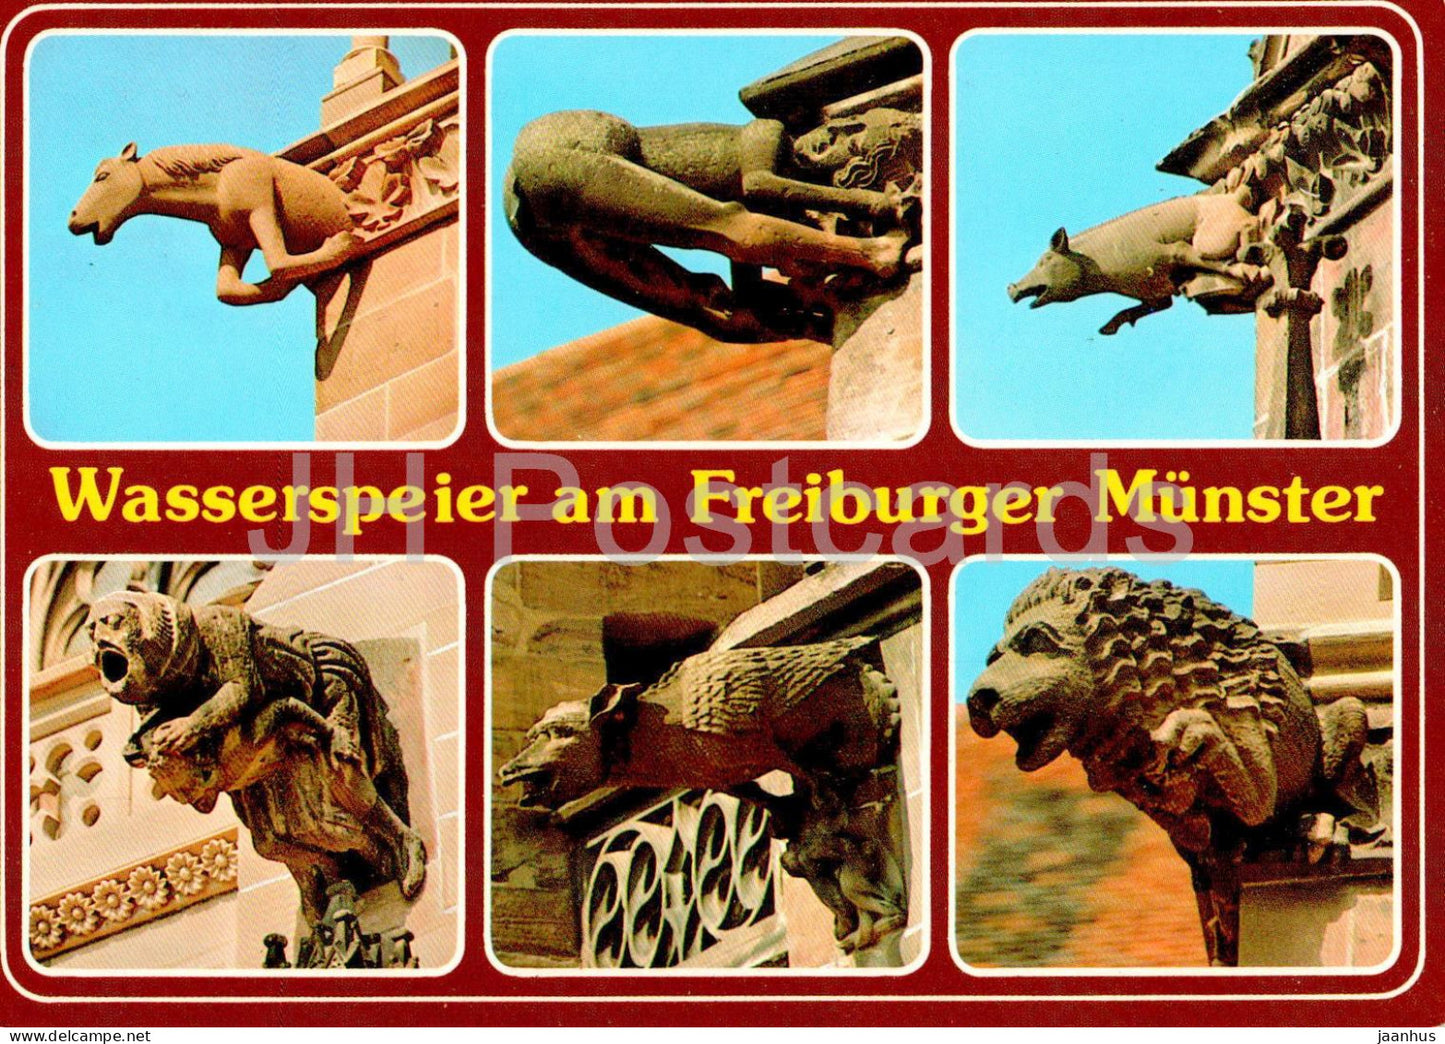 Freiburg - Wasserspeier am Freiburger Munster - gargoyle - multiview - 7800 - 1971 - Germany - unused - JH Postcards